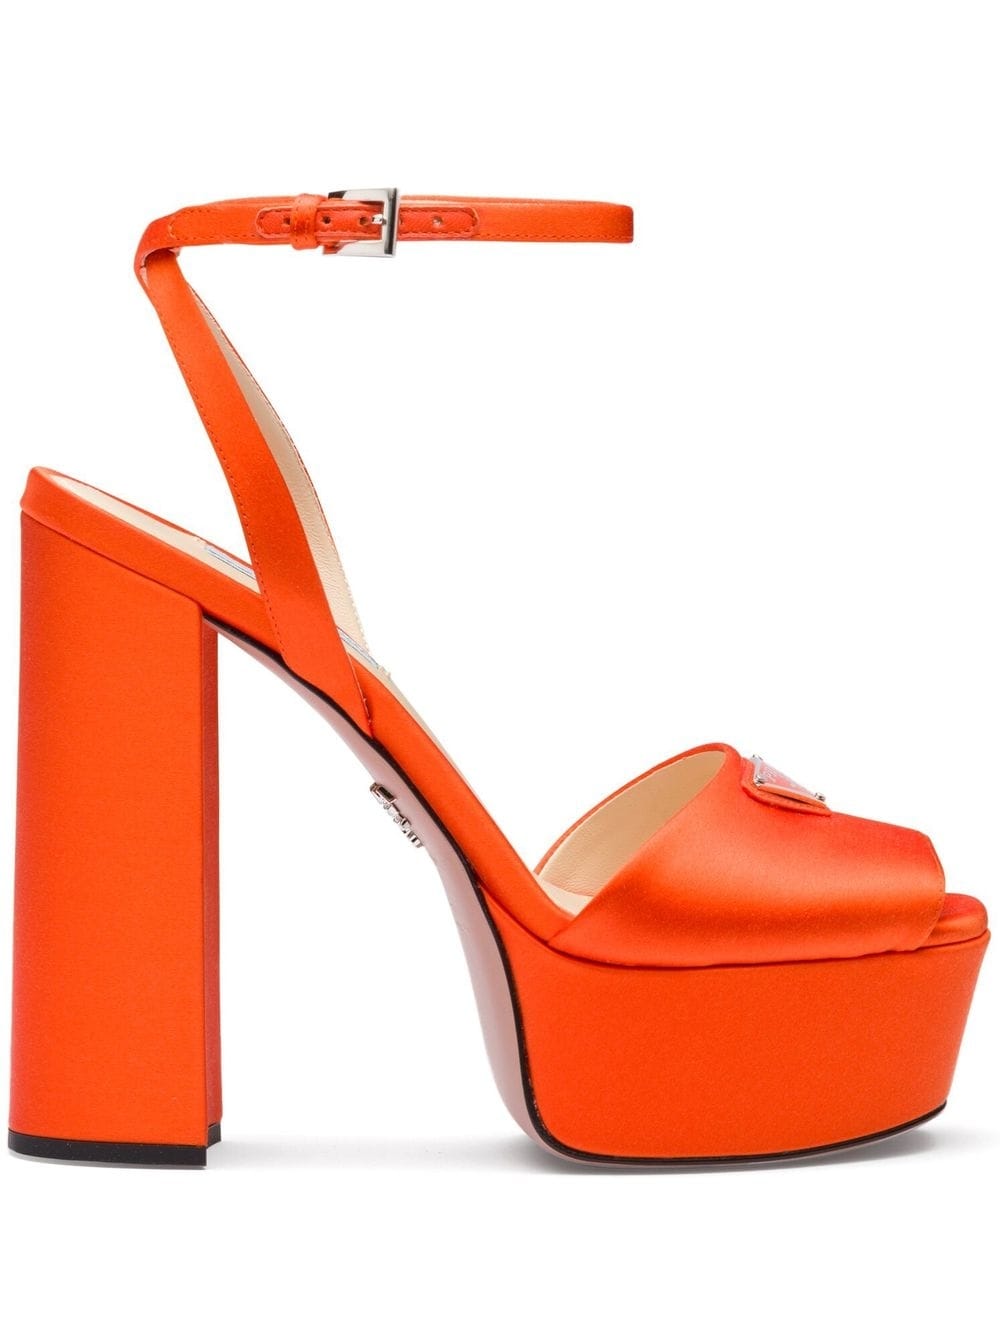 Prada satin platform sandals - Orange